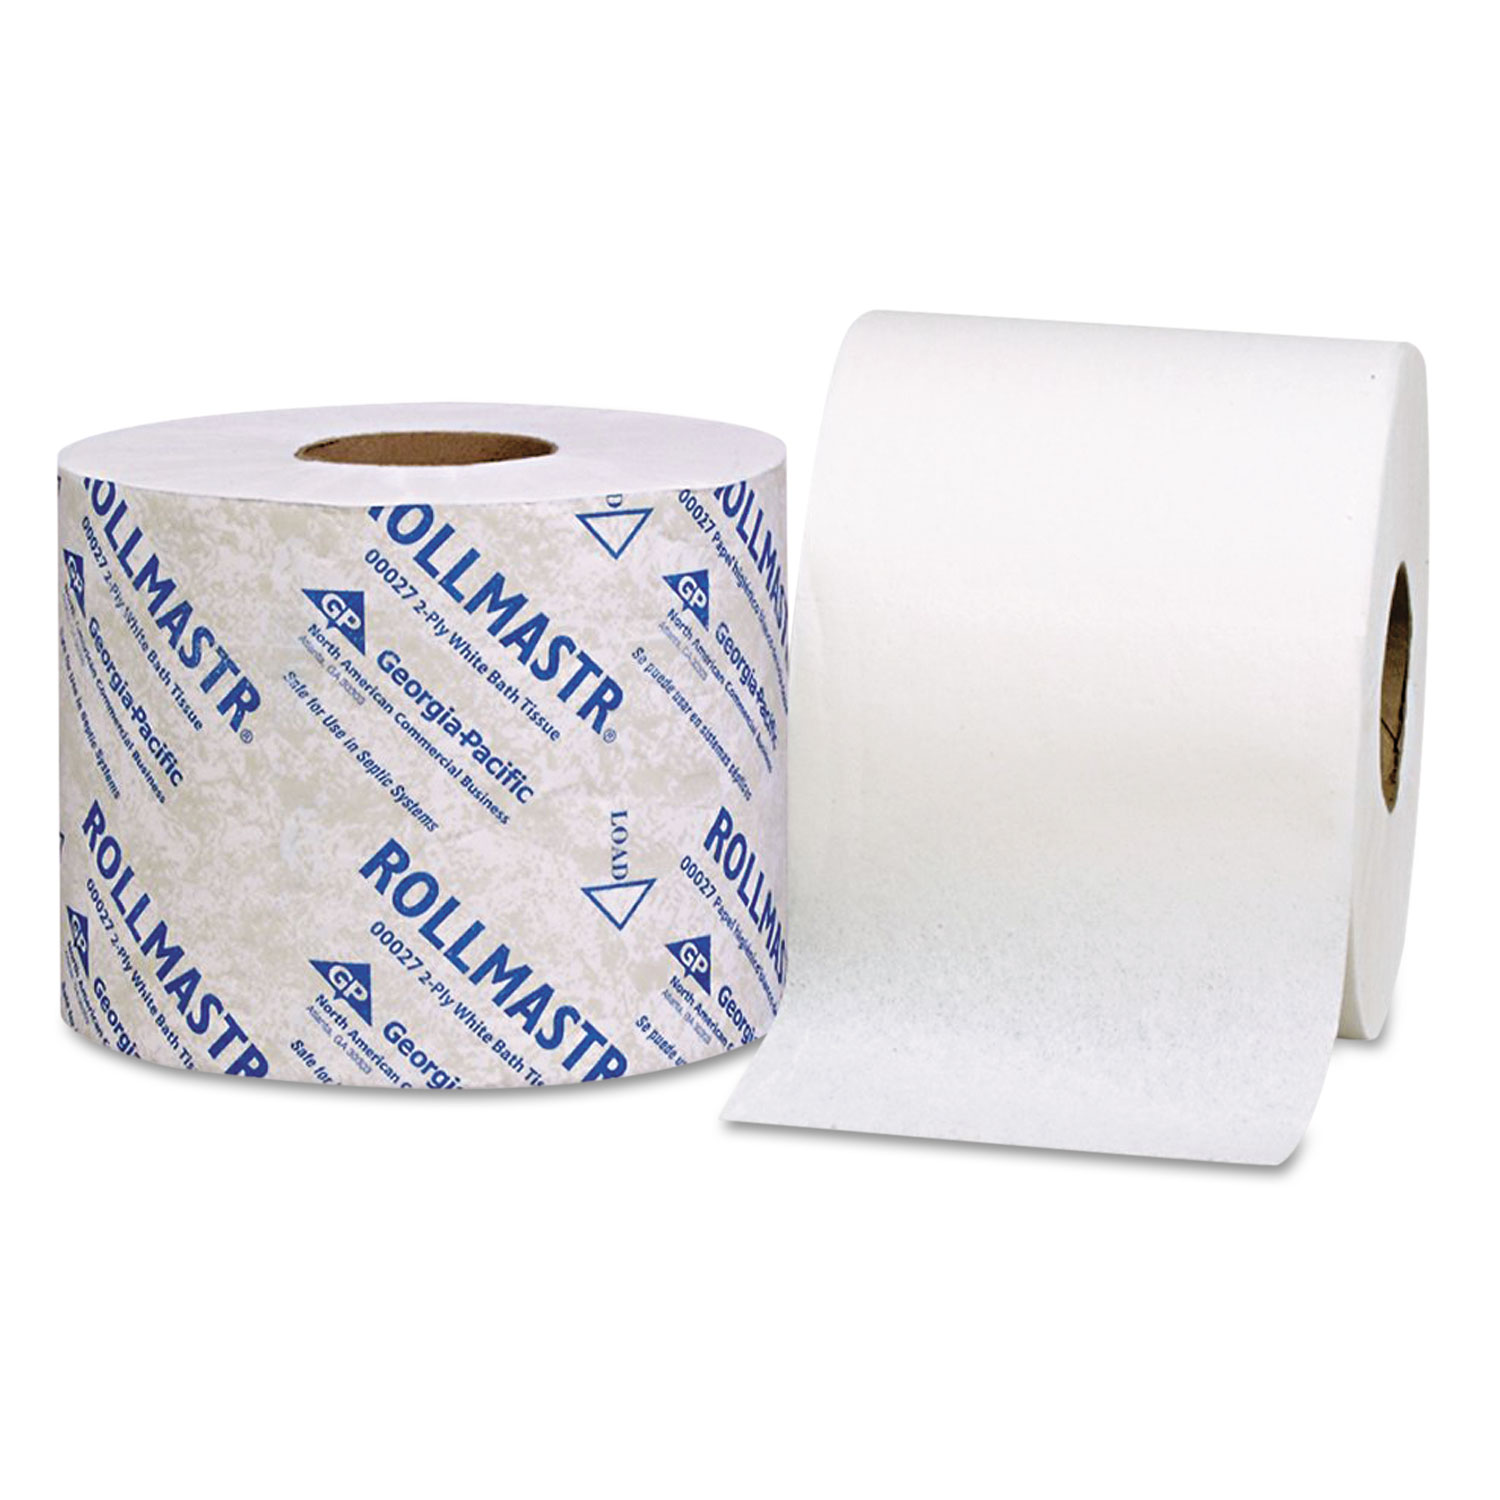 Two-Ply Facial Quality Bathroom Tissue, 770 Sheets Roll, 48 Rolls/Carton